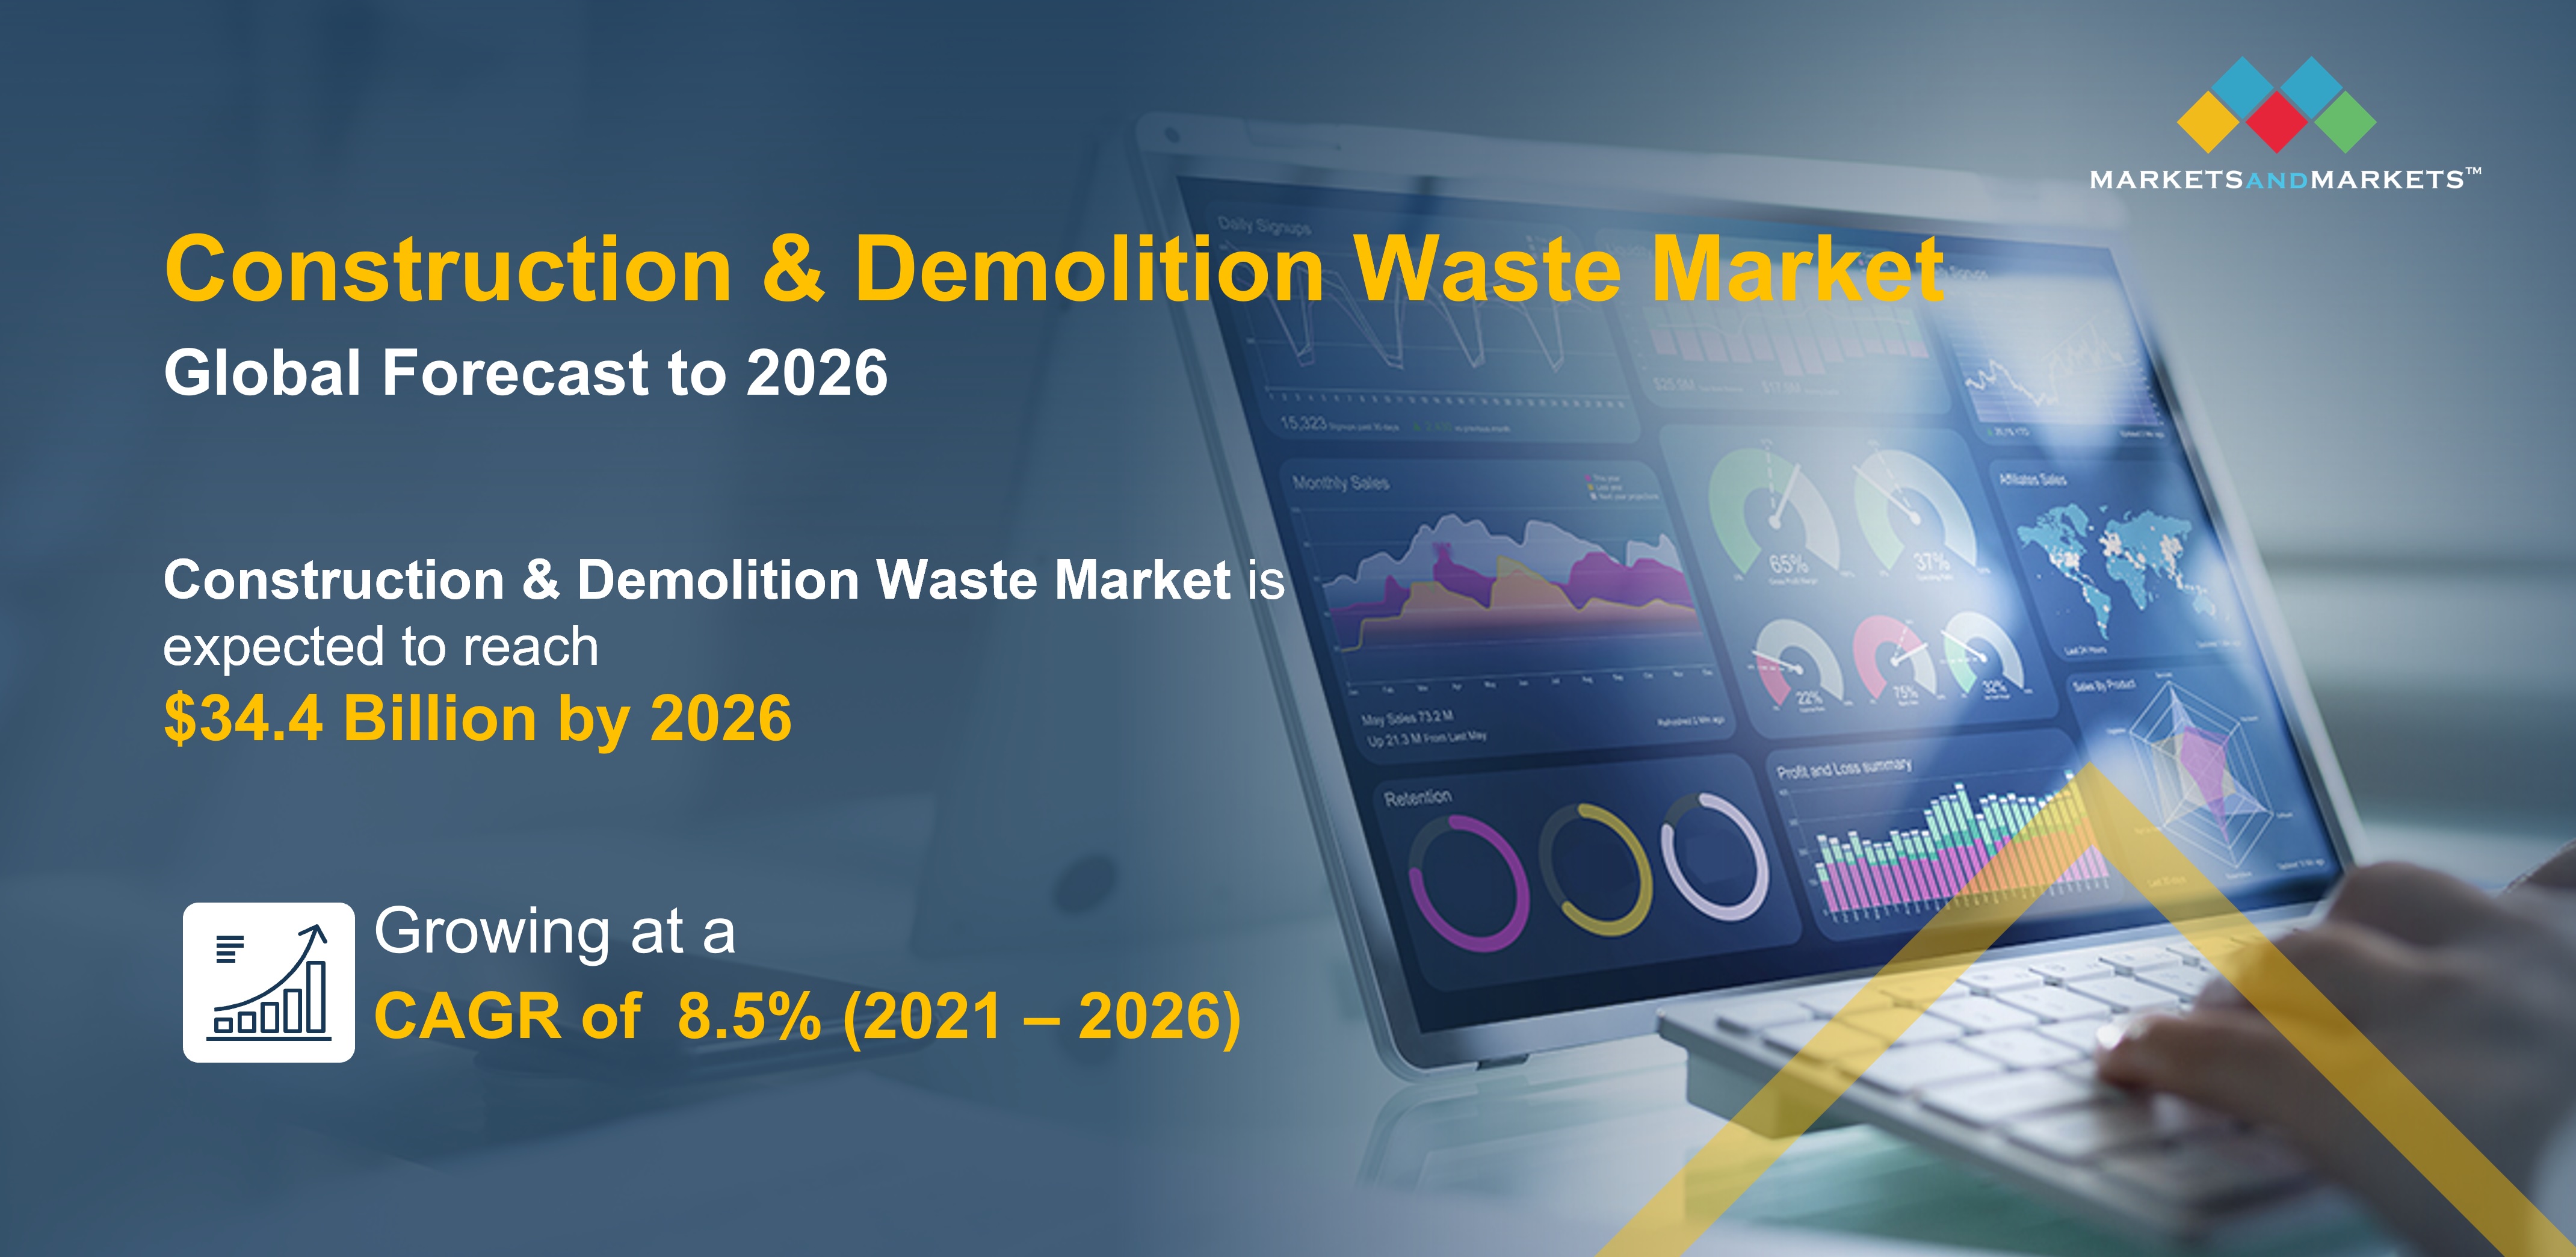 Construction & Demolition Waste Market